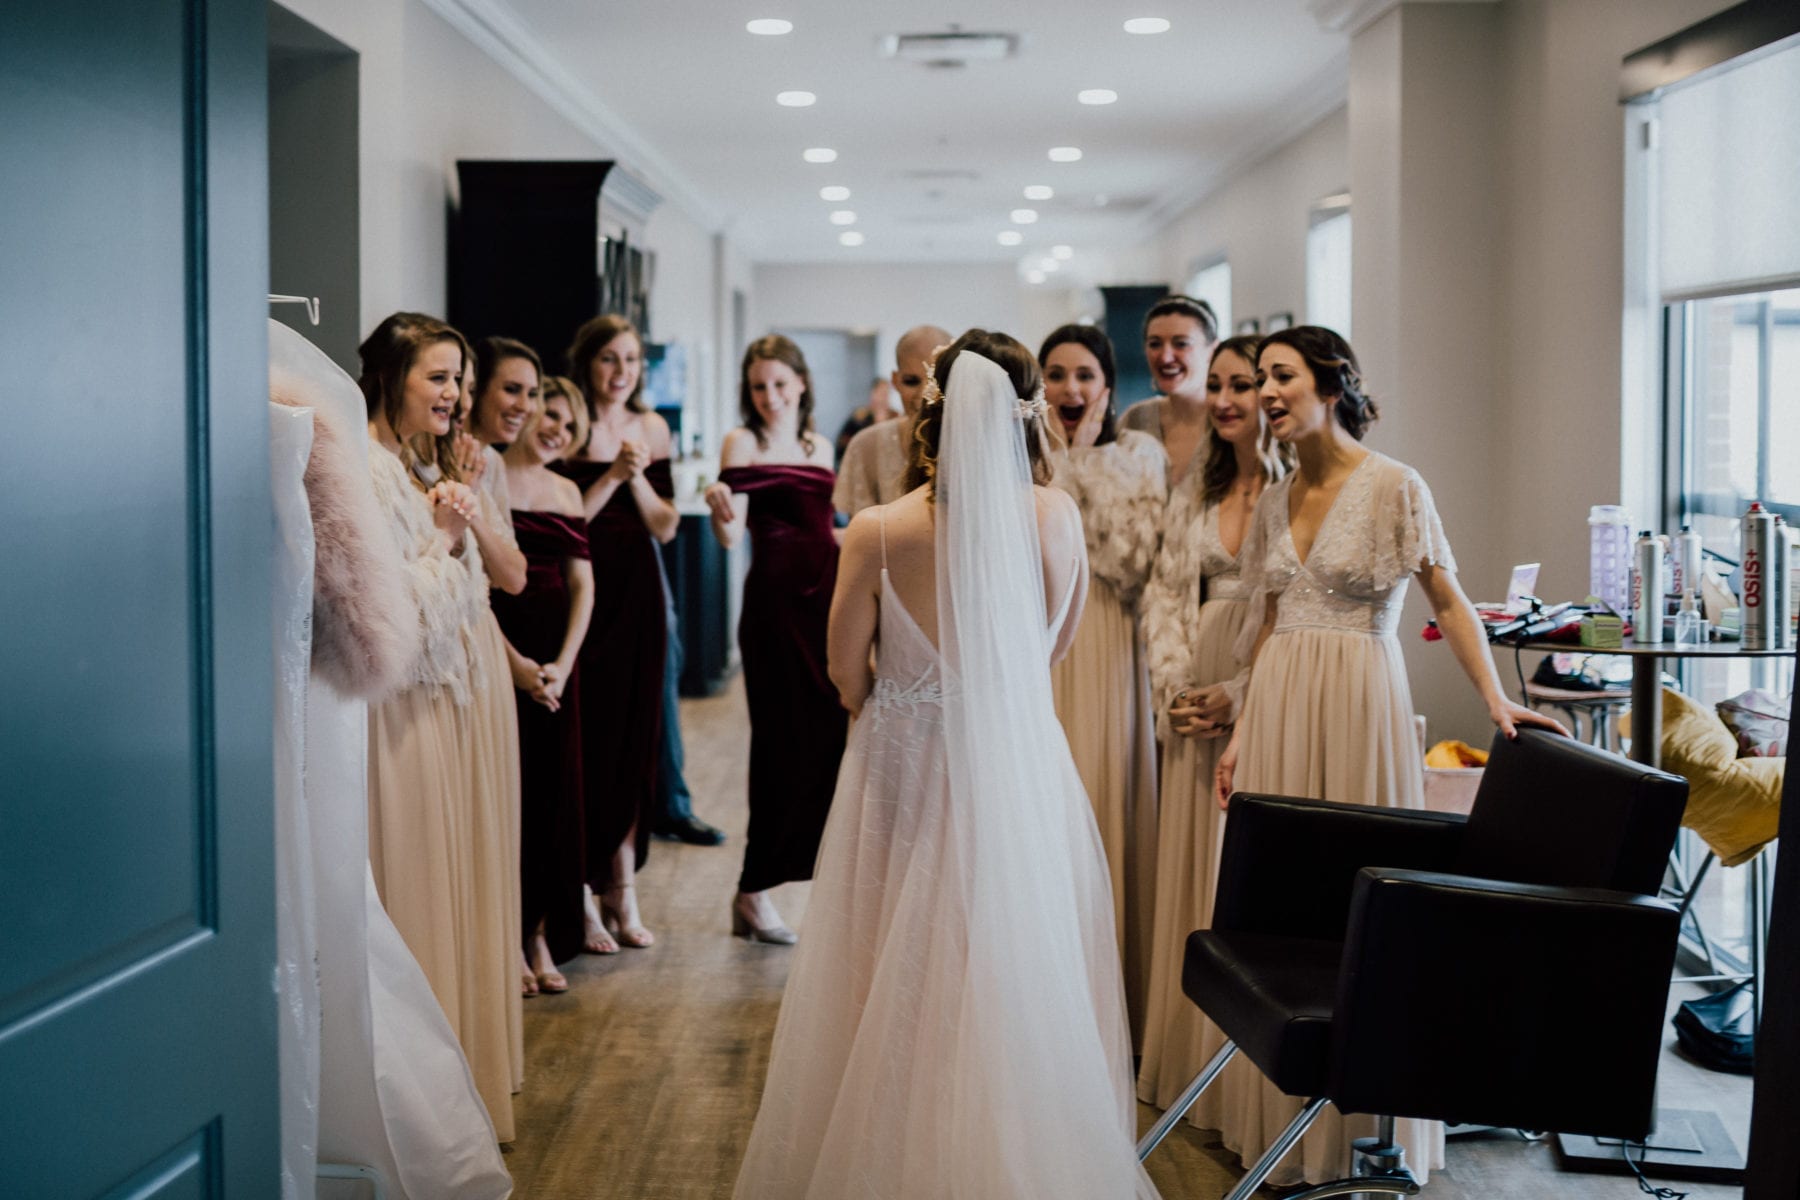 Bride reveals her dress to her bridesmaids